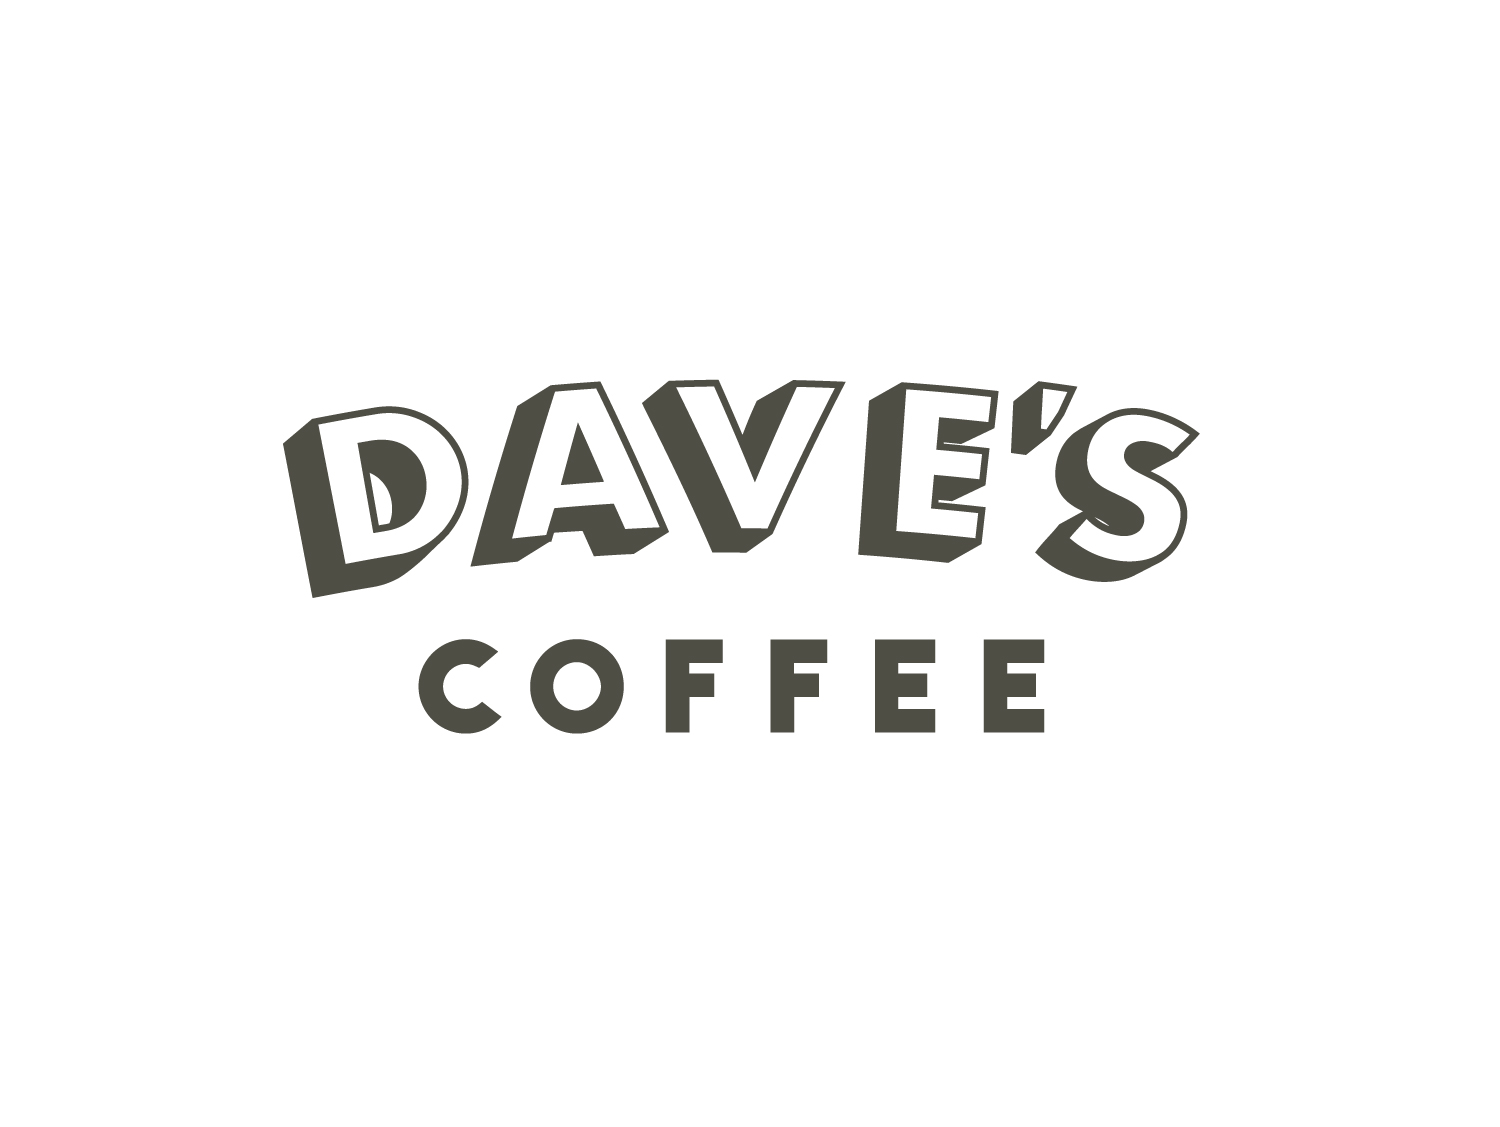 Daves-Coffee-logo-01c-01.jpg